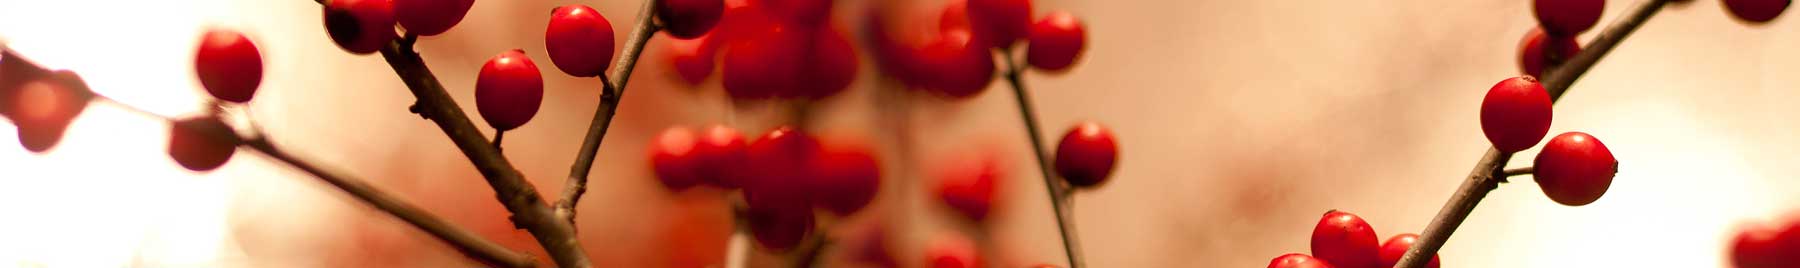 Red berries 